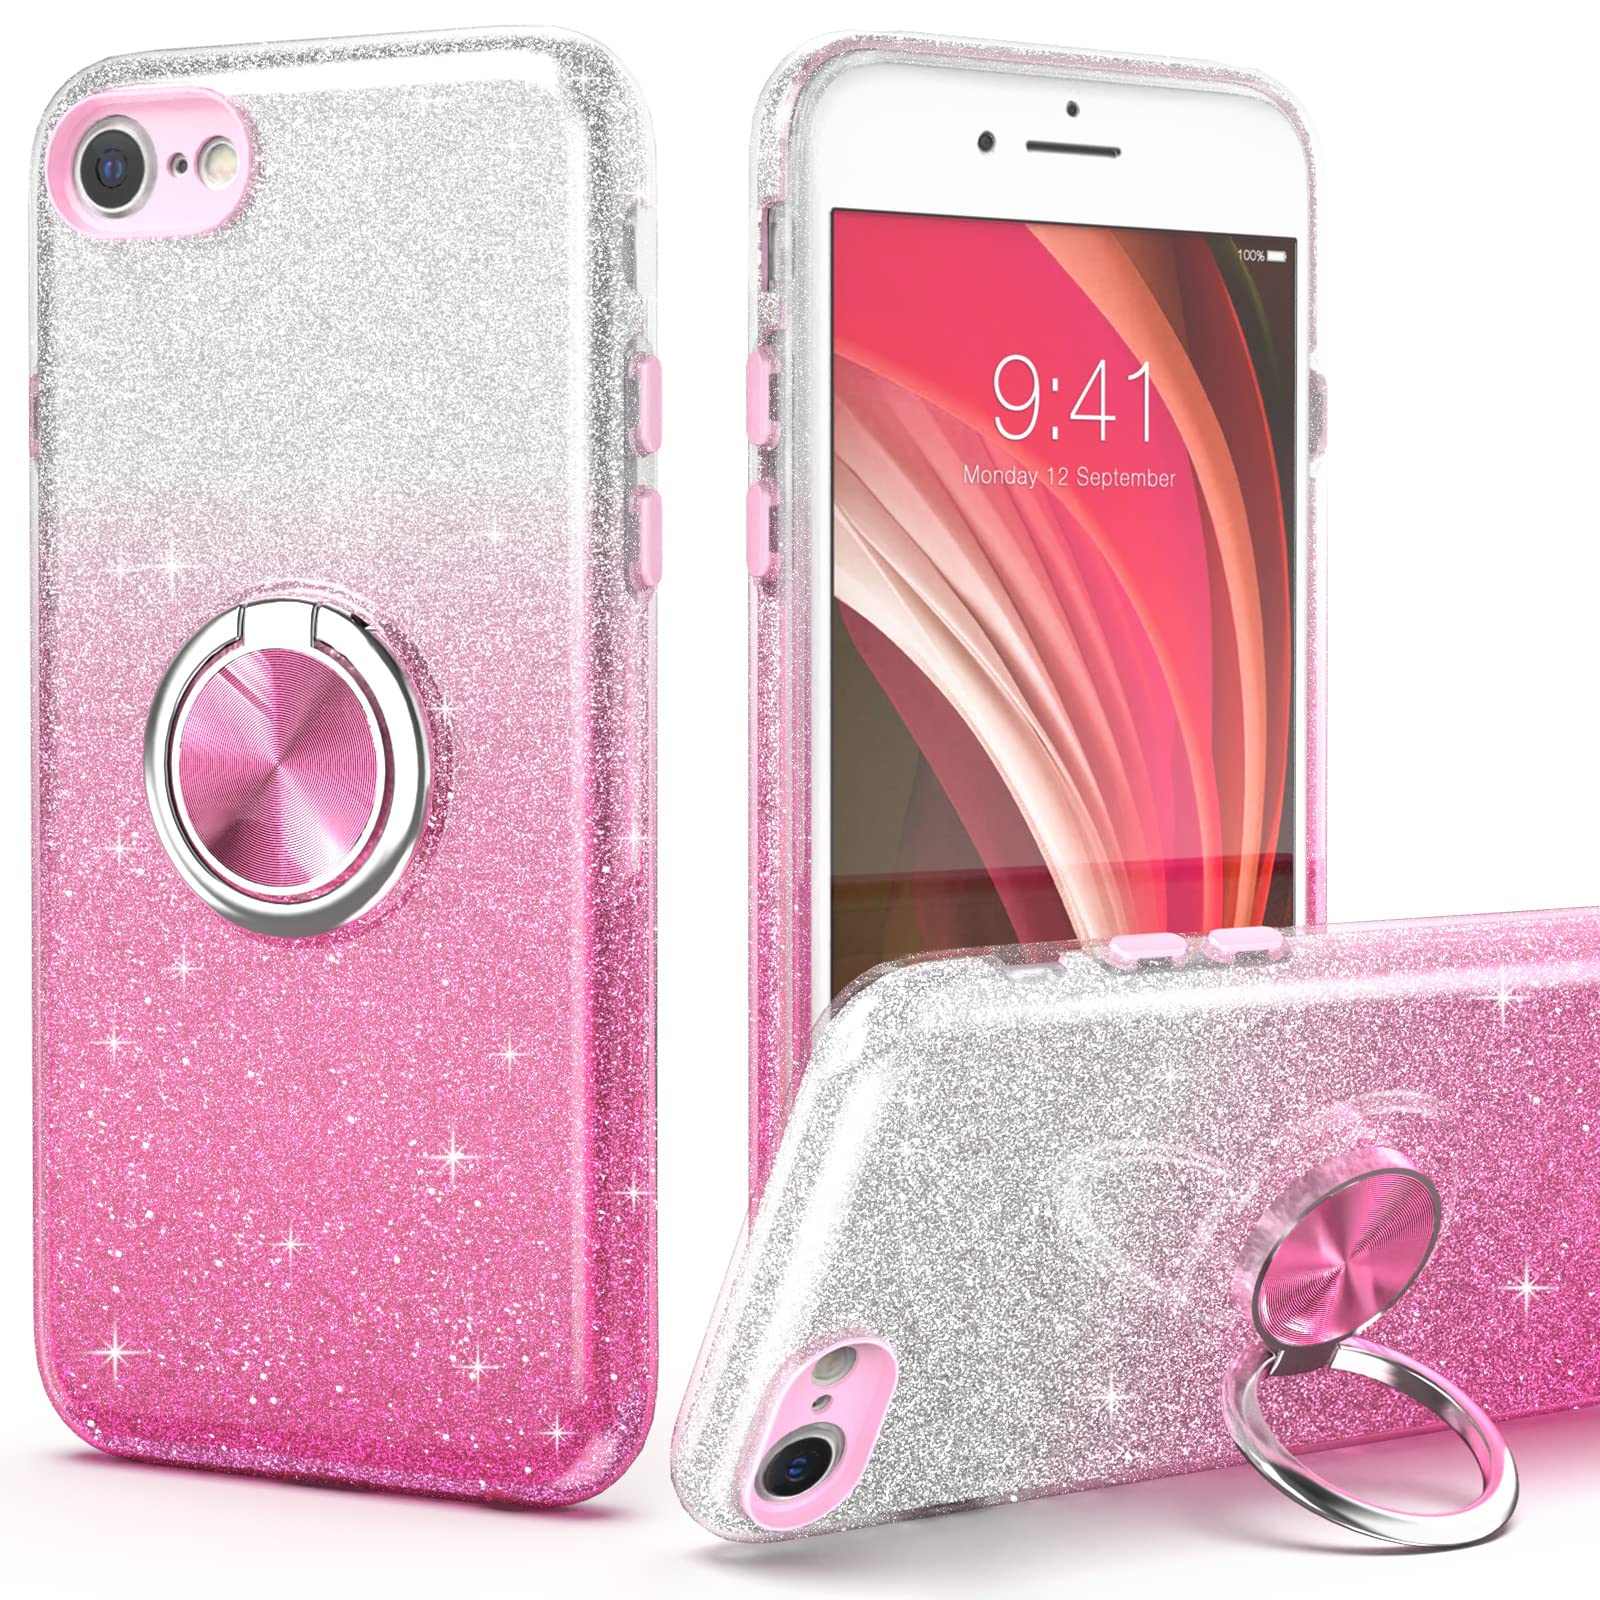 PeeTep iPhone SE 2020 case,iPhone SE 3 case glitter for girls,iPhone 8 case,iPhone 7 case,Slim Sparkly case with 360ARing Holder